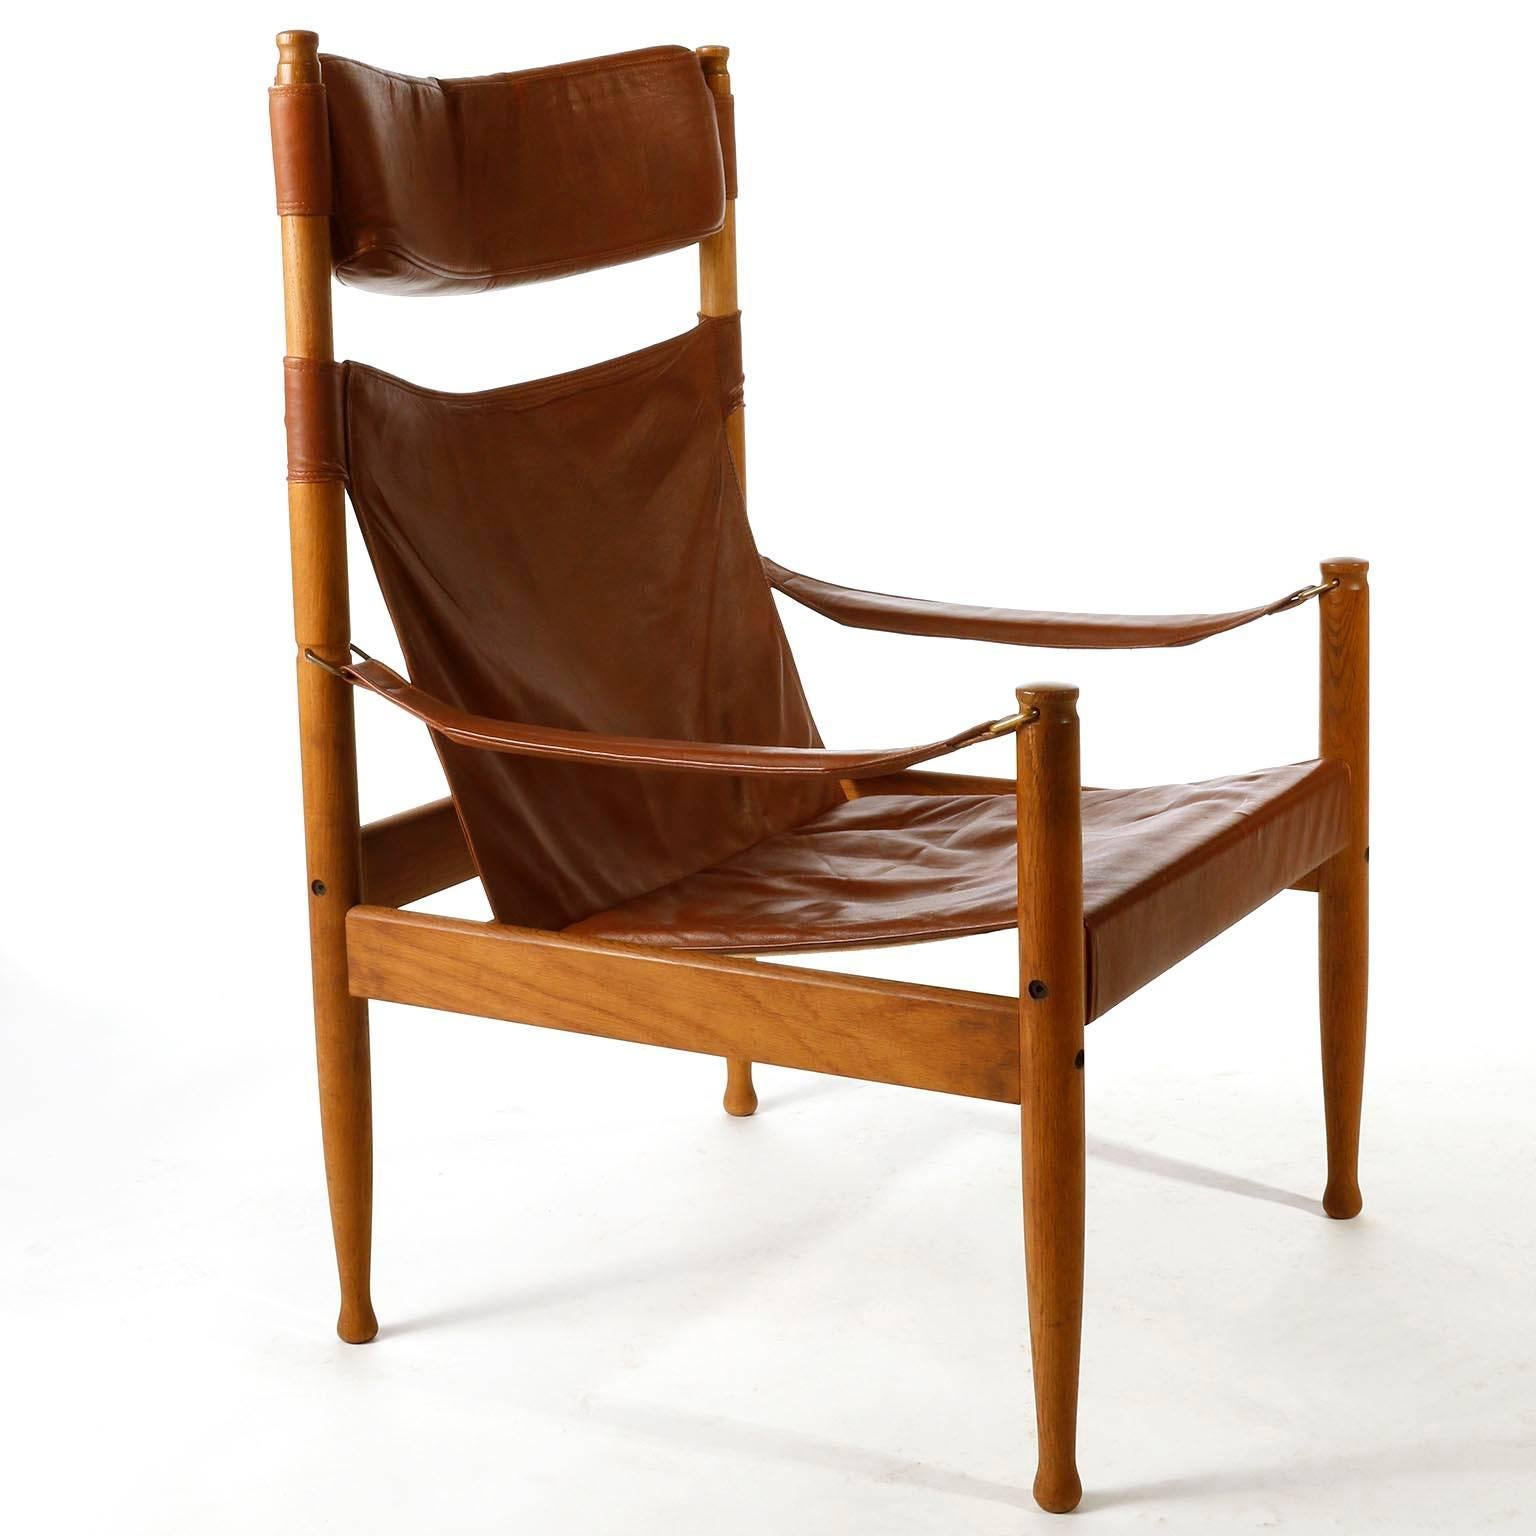 Mid-20th Century Erik Worts Safari Chair Ottoman Cognac Leather for Niels Eilersen, Denmark, 1960